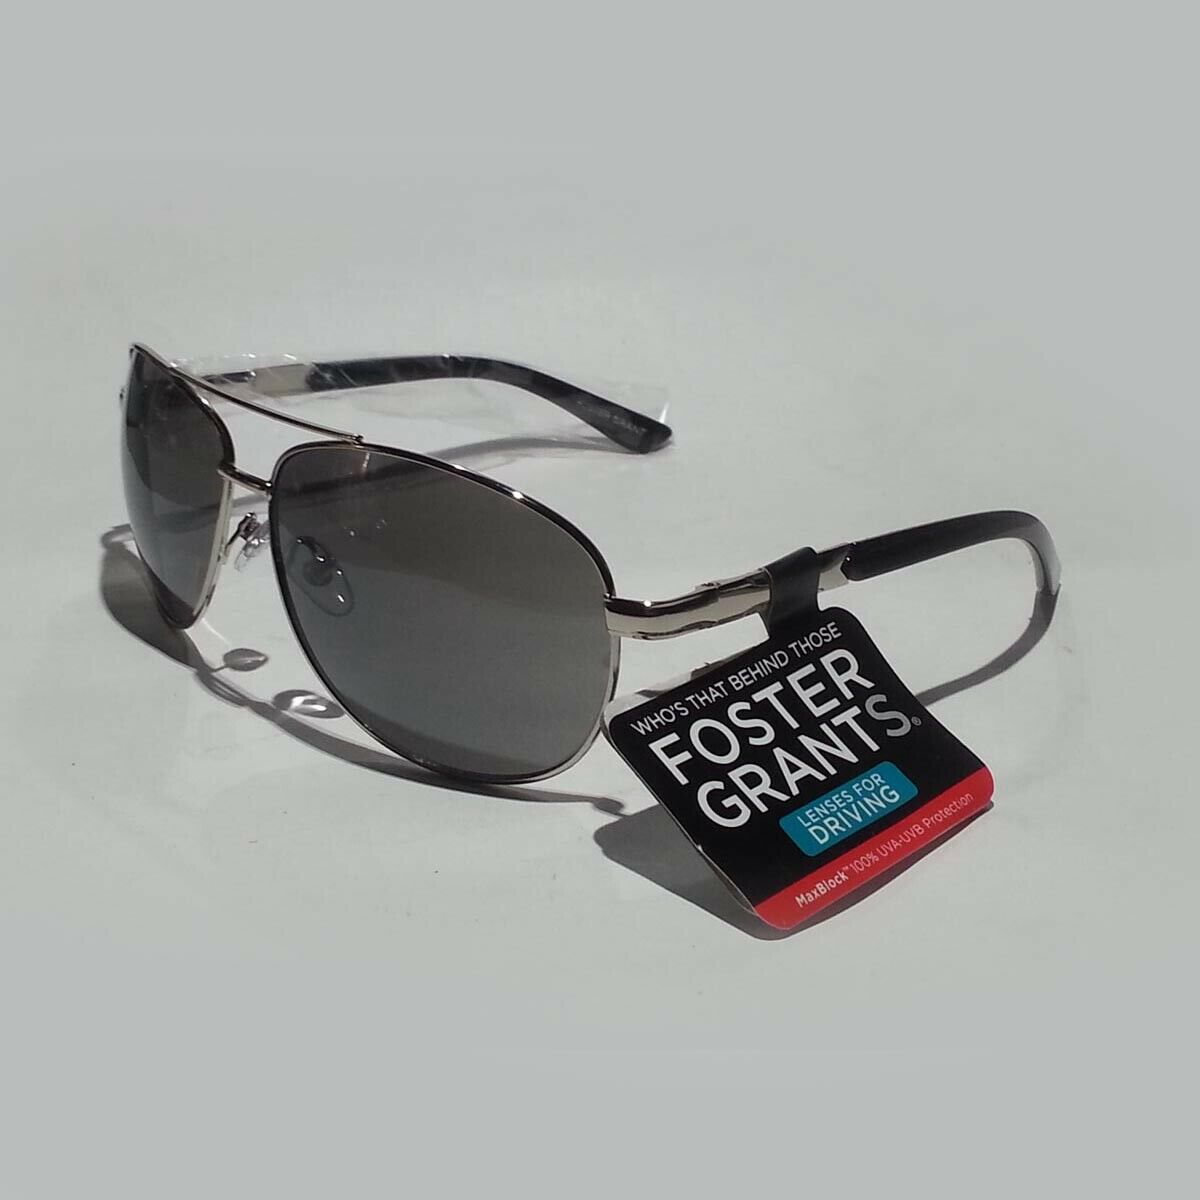 Primary image for Foster Grant Sunday Drive Men Sunglasses Lenses for Driving Black